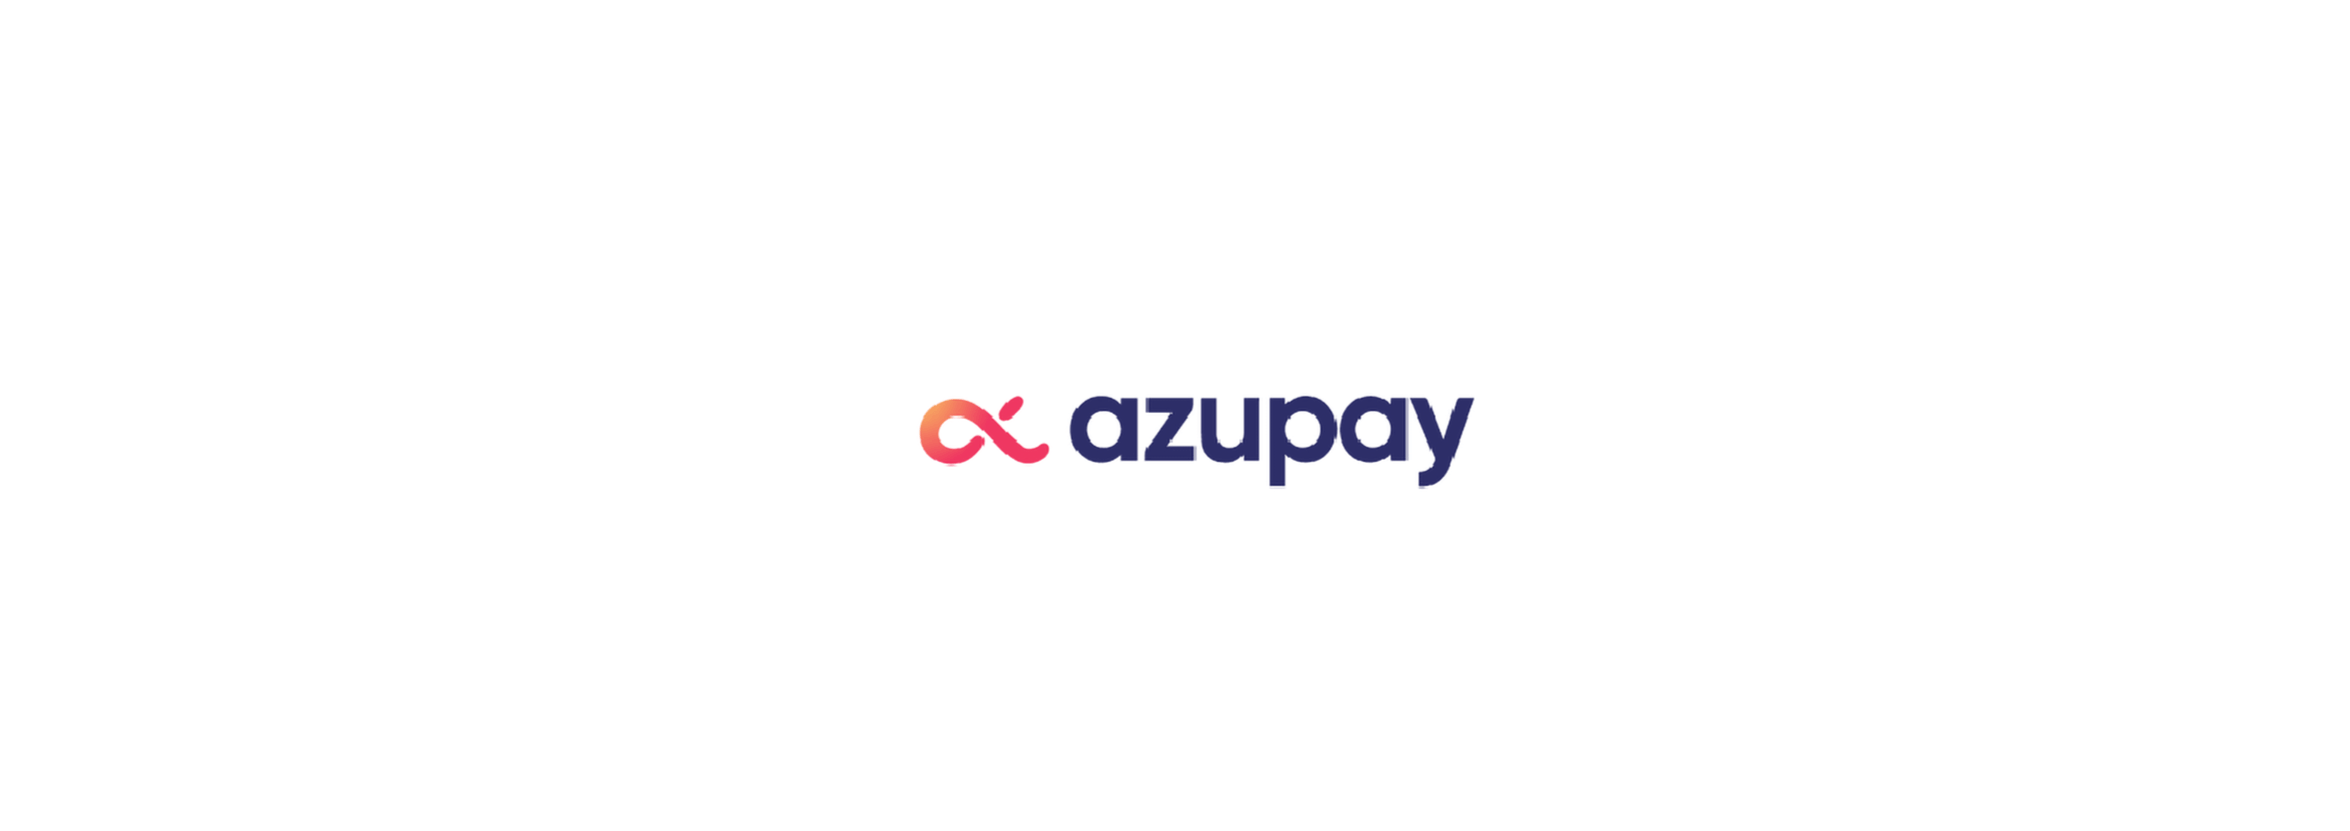 The Azupay logo